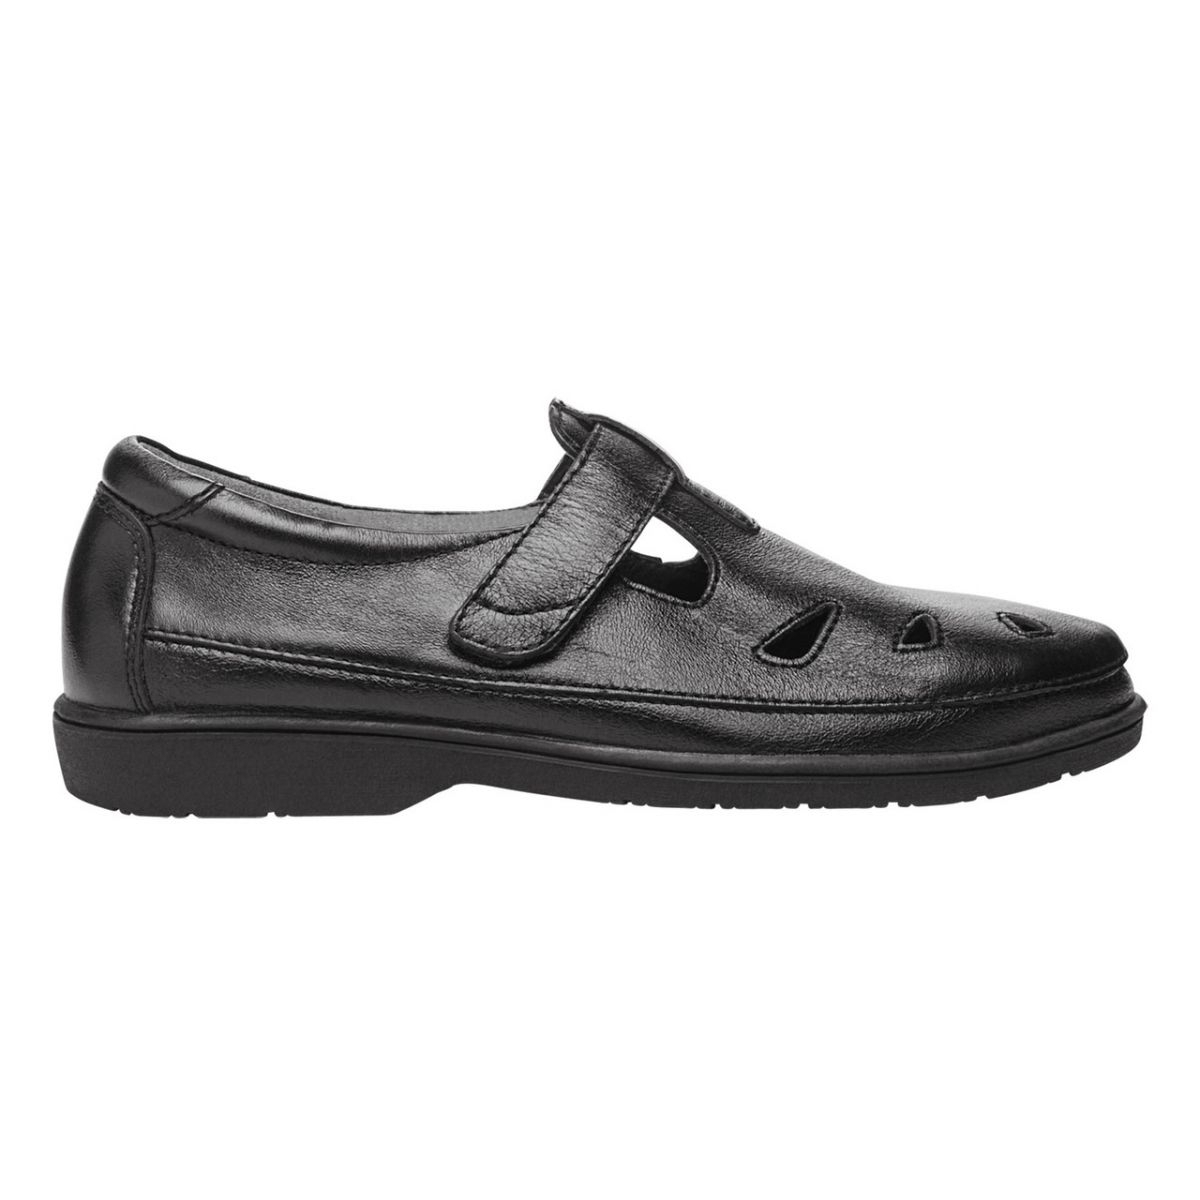 Propet Women's Ladybug T-Strap Shoe Black - W3232B BLACK - BLACK, 8-M